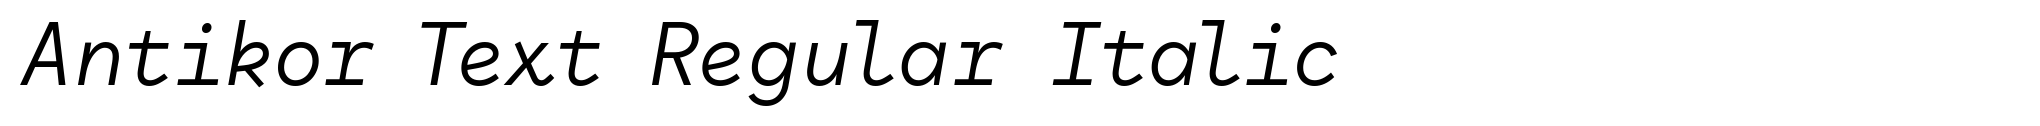 Antikor Text Regular Italic image